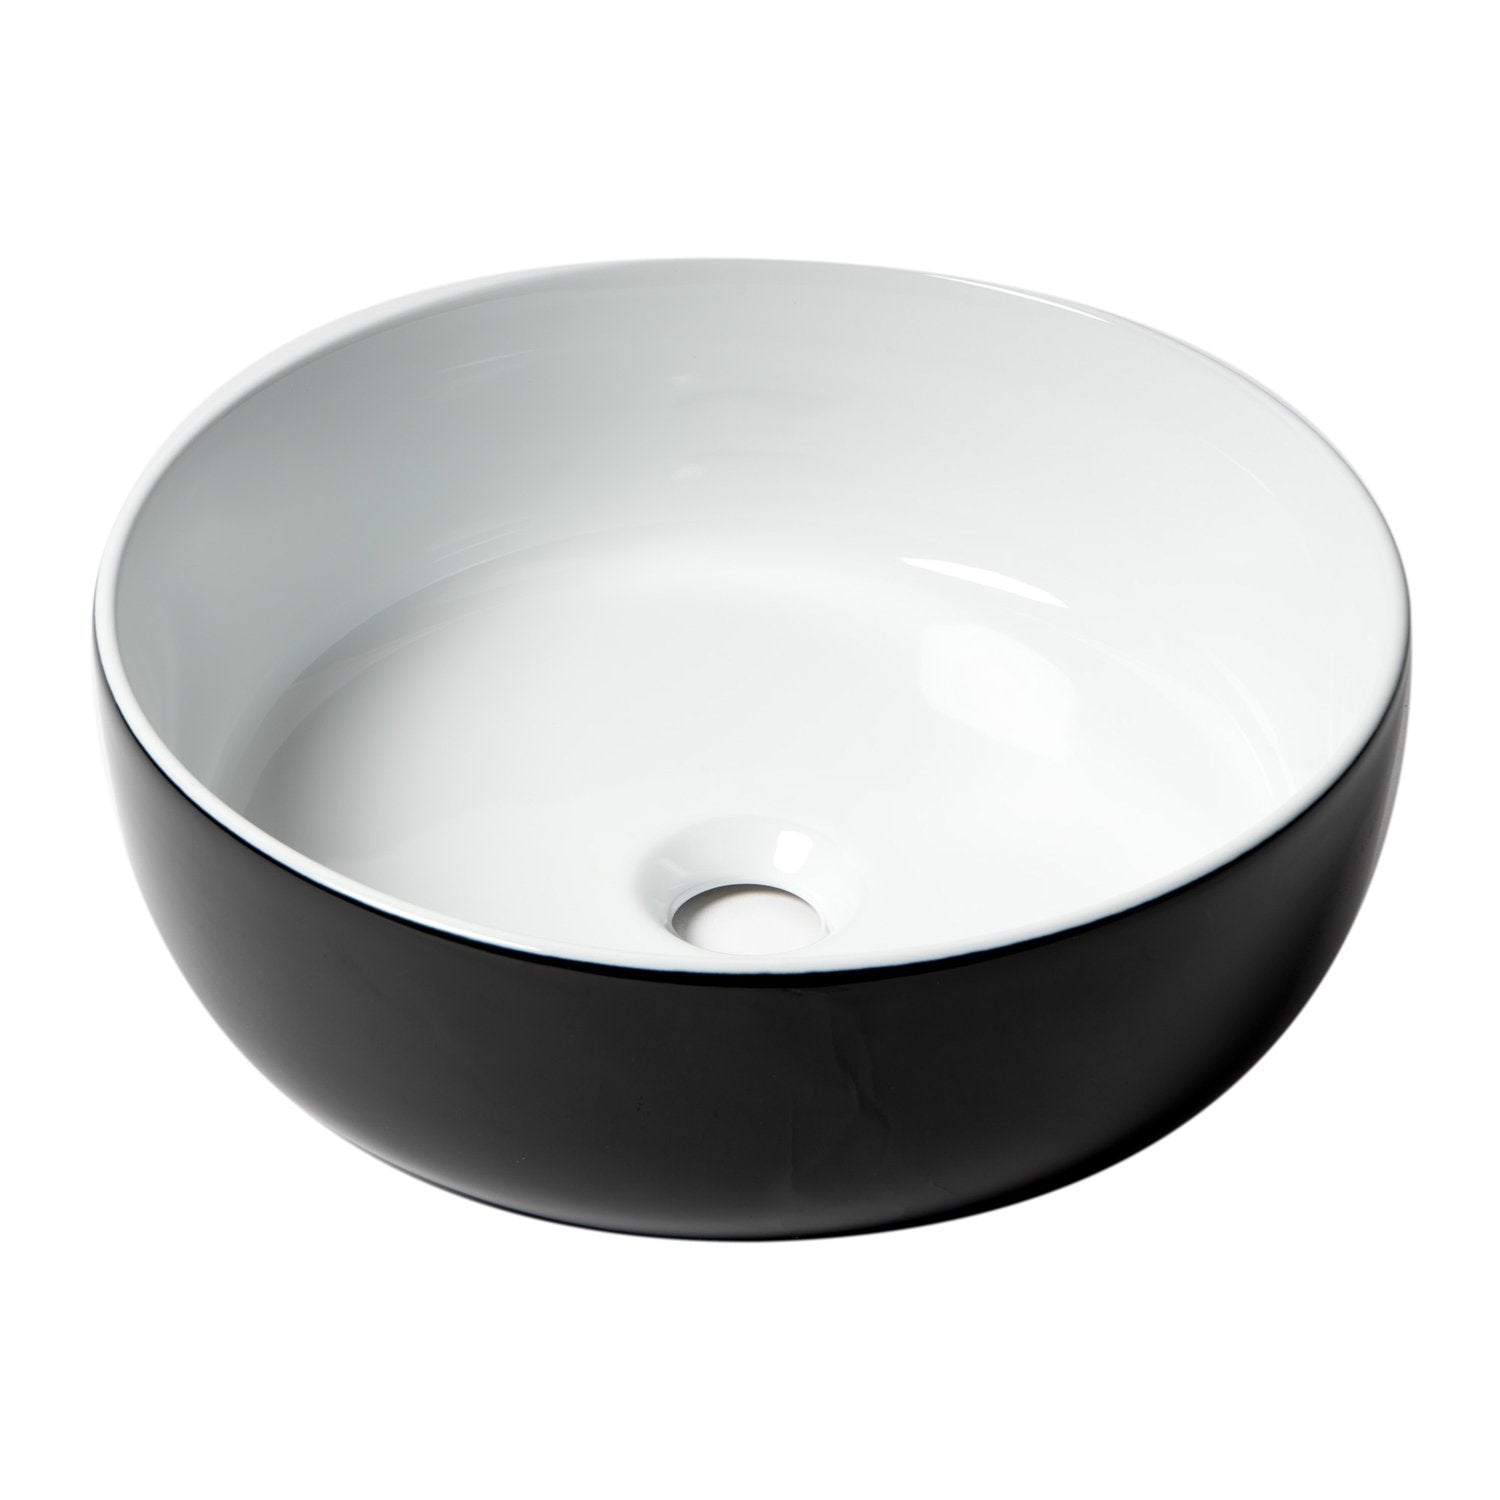 ALFI ABC908 Black & White 15" Round Above Mount Ceramic Sink